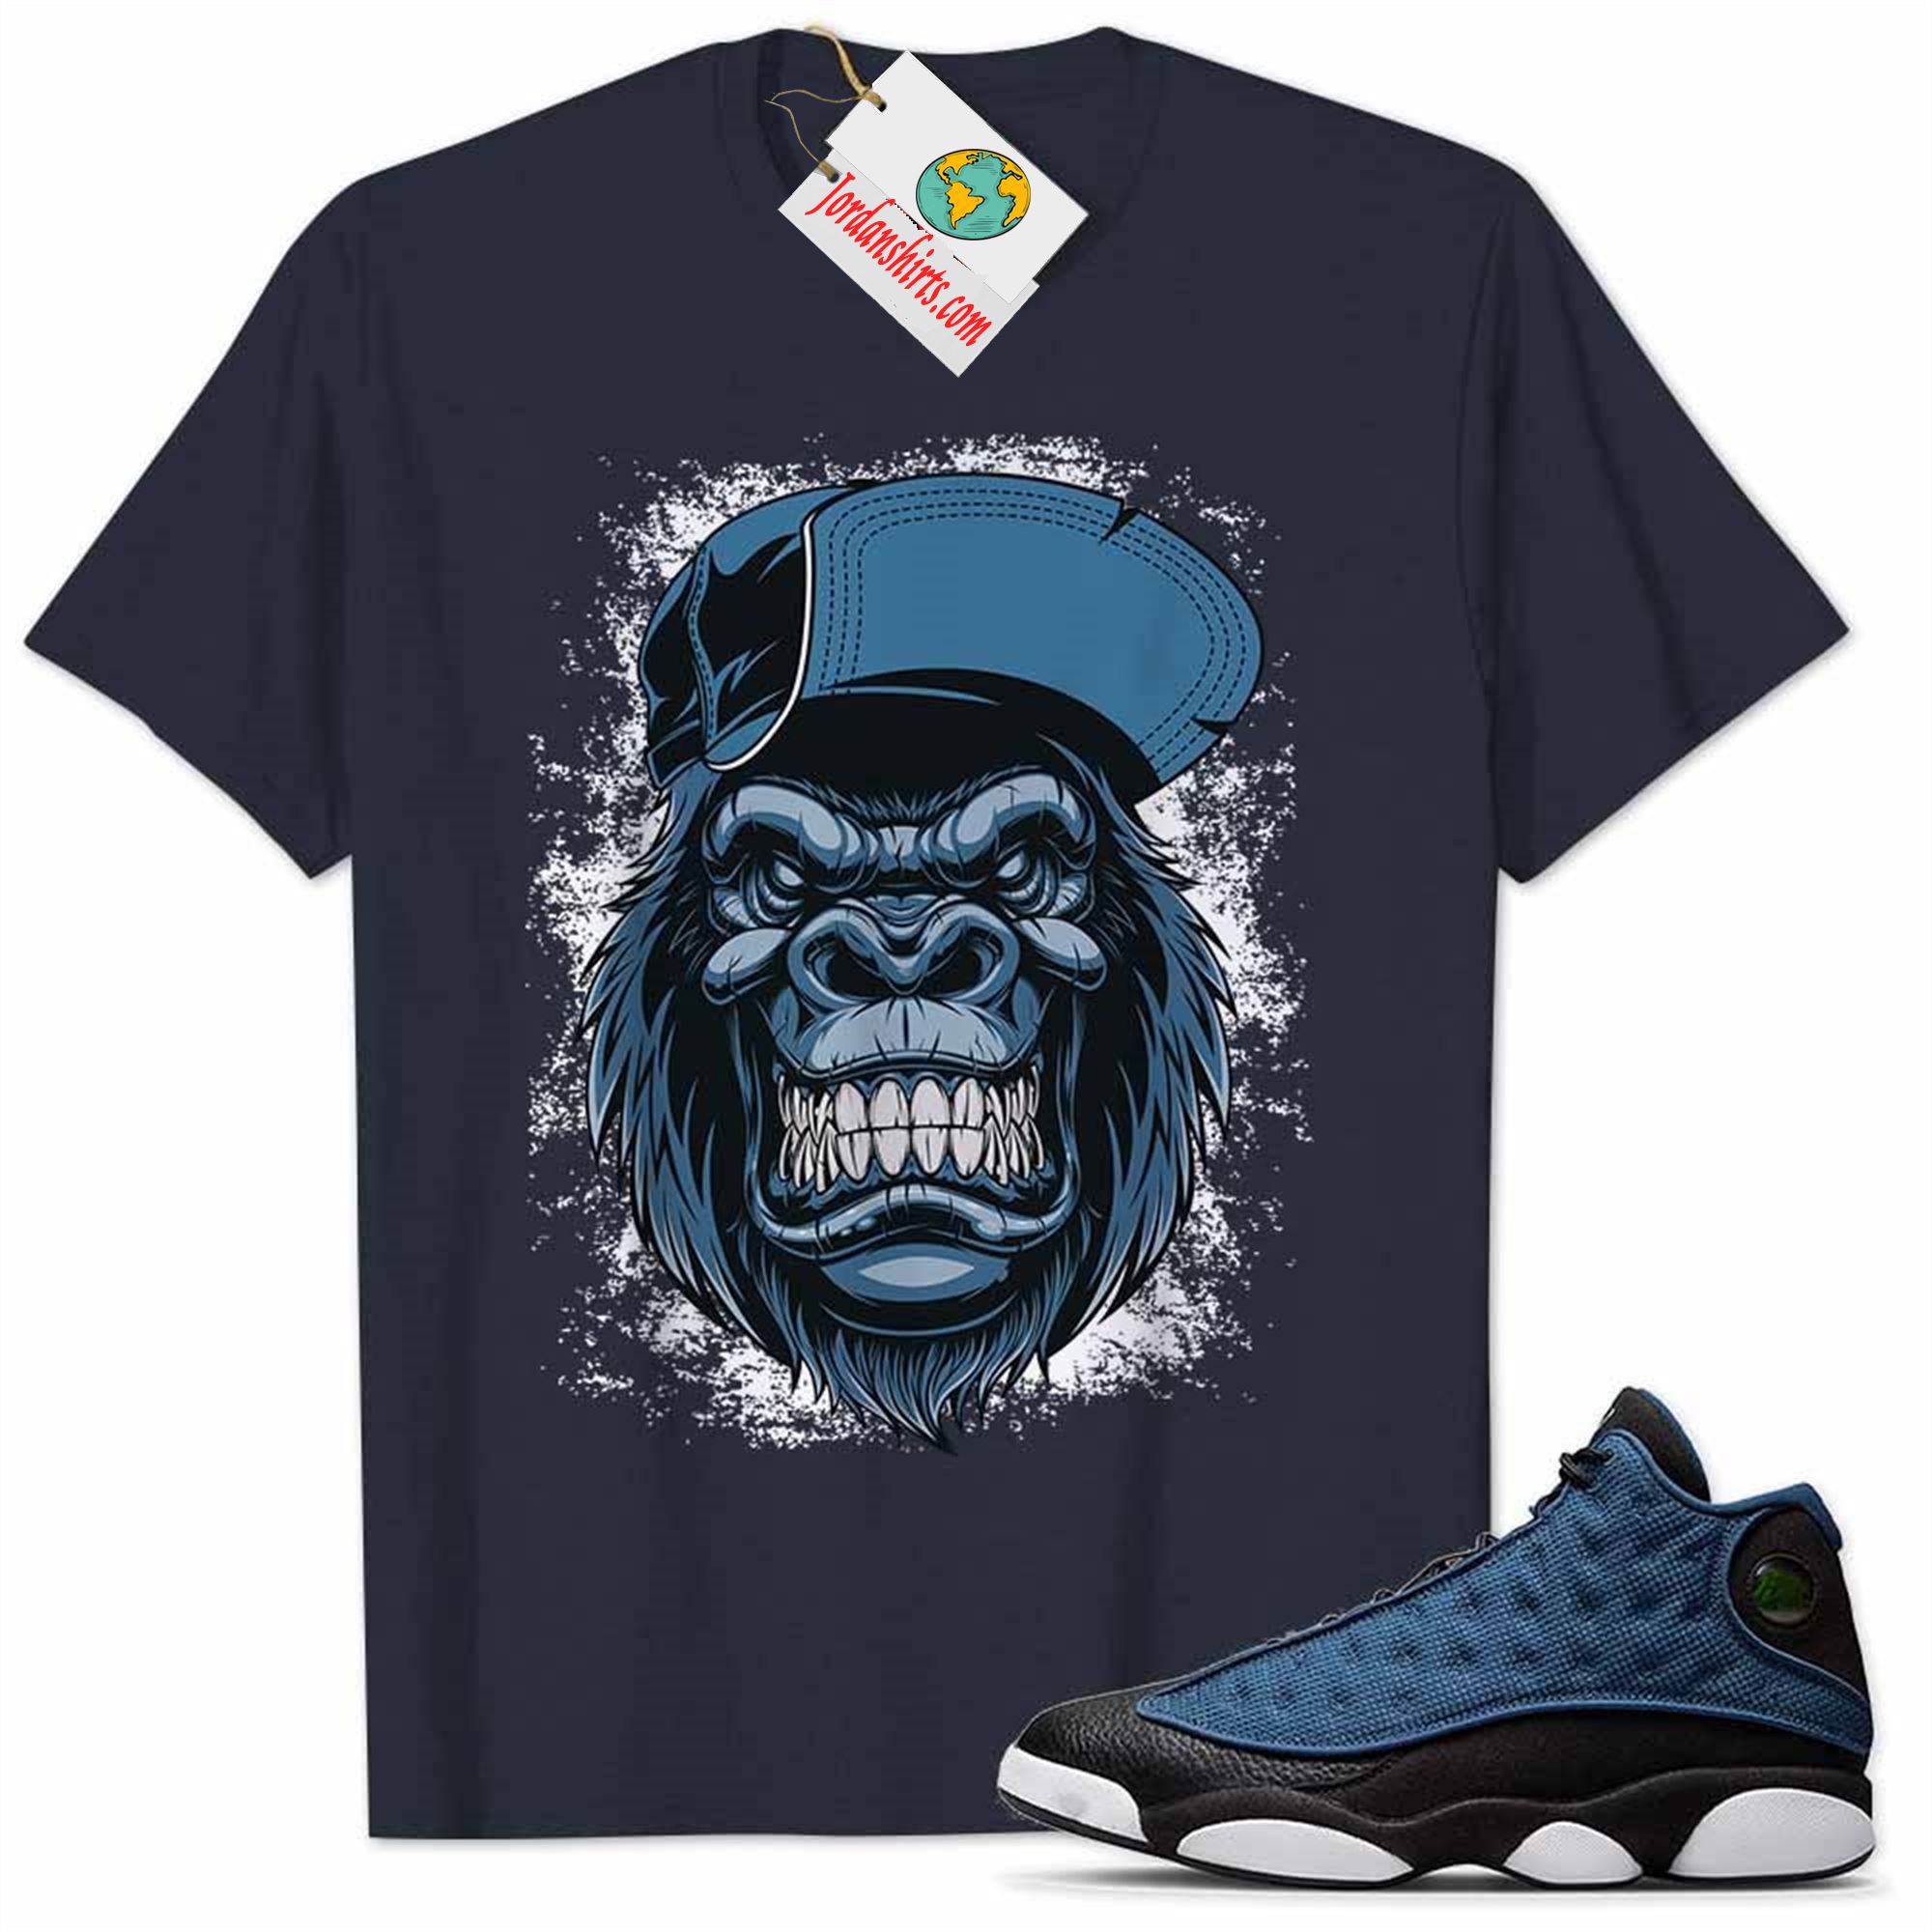 Jordan 13 Shirt, Jordan 13 Brave Blue Shirt Ferocious Gorilla Navy Size Up To 5xl